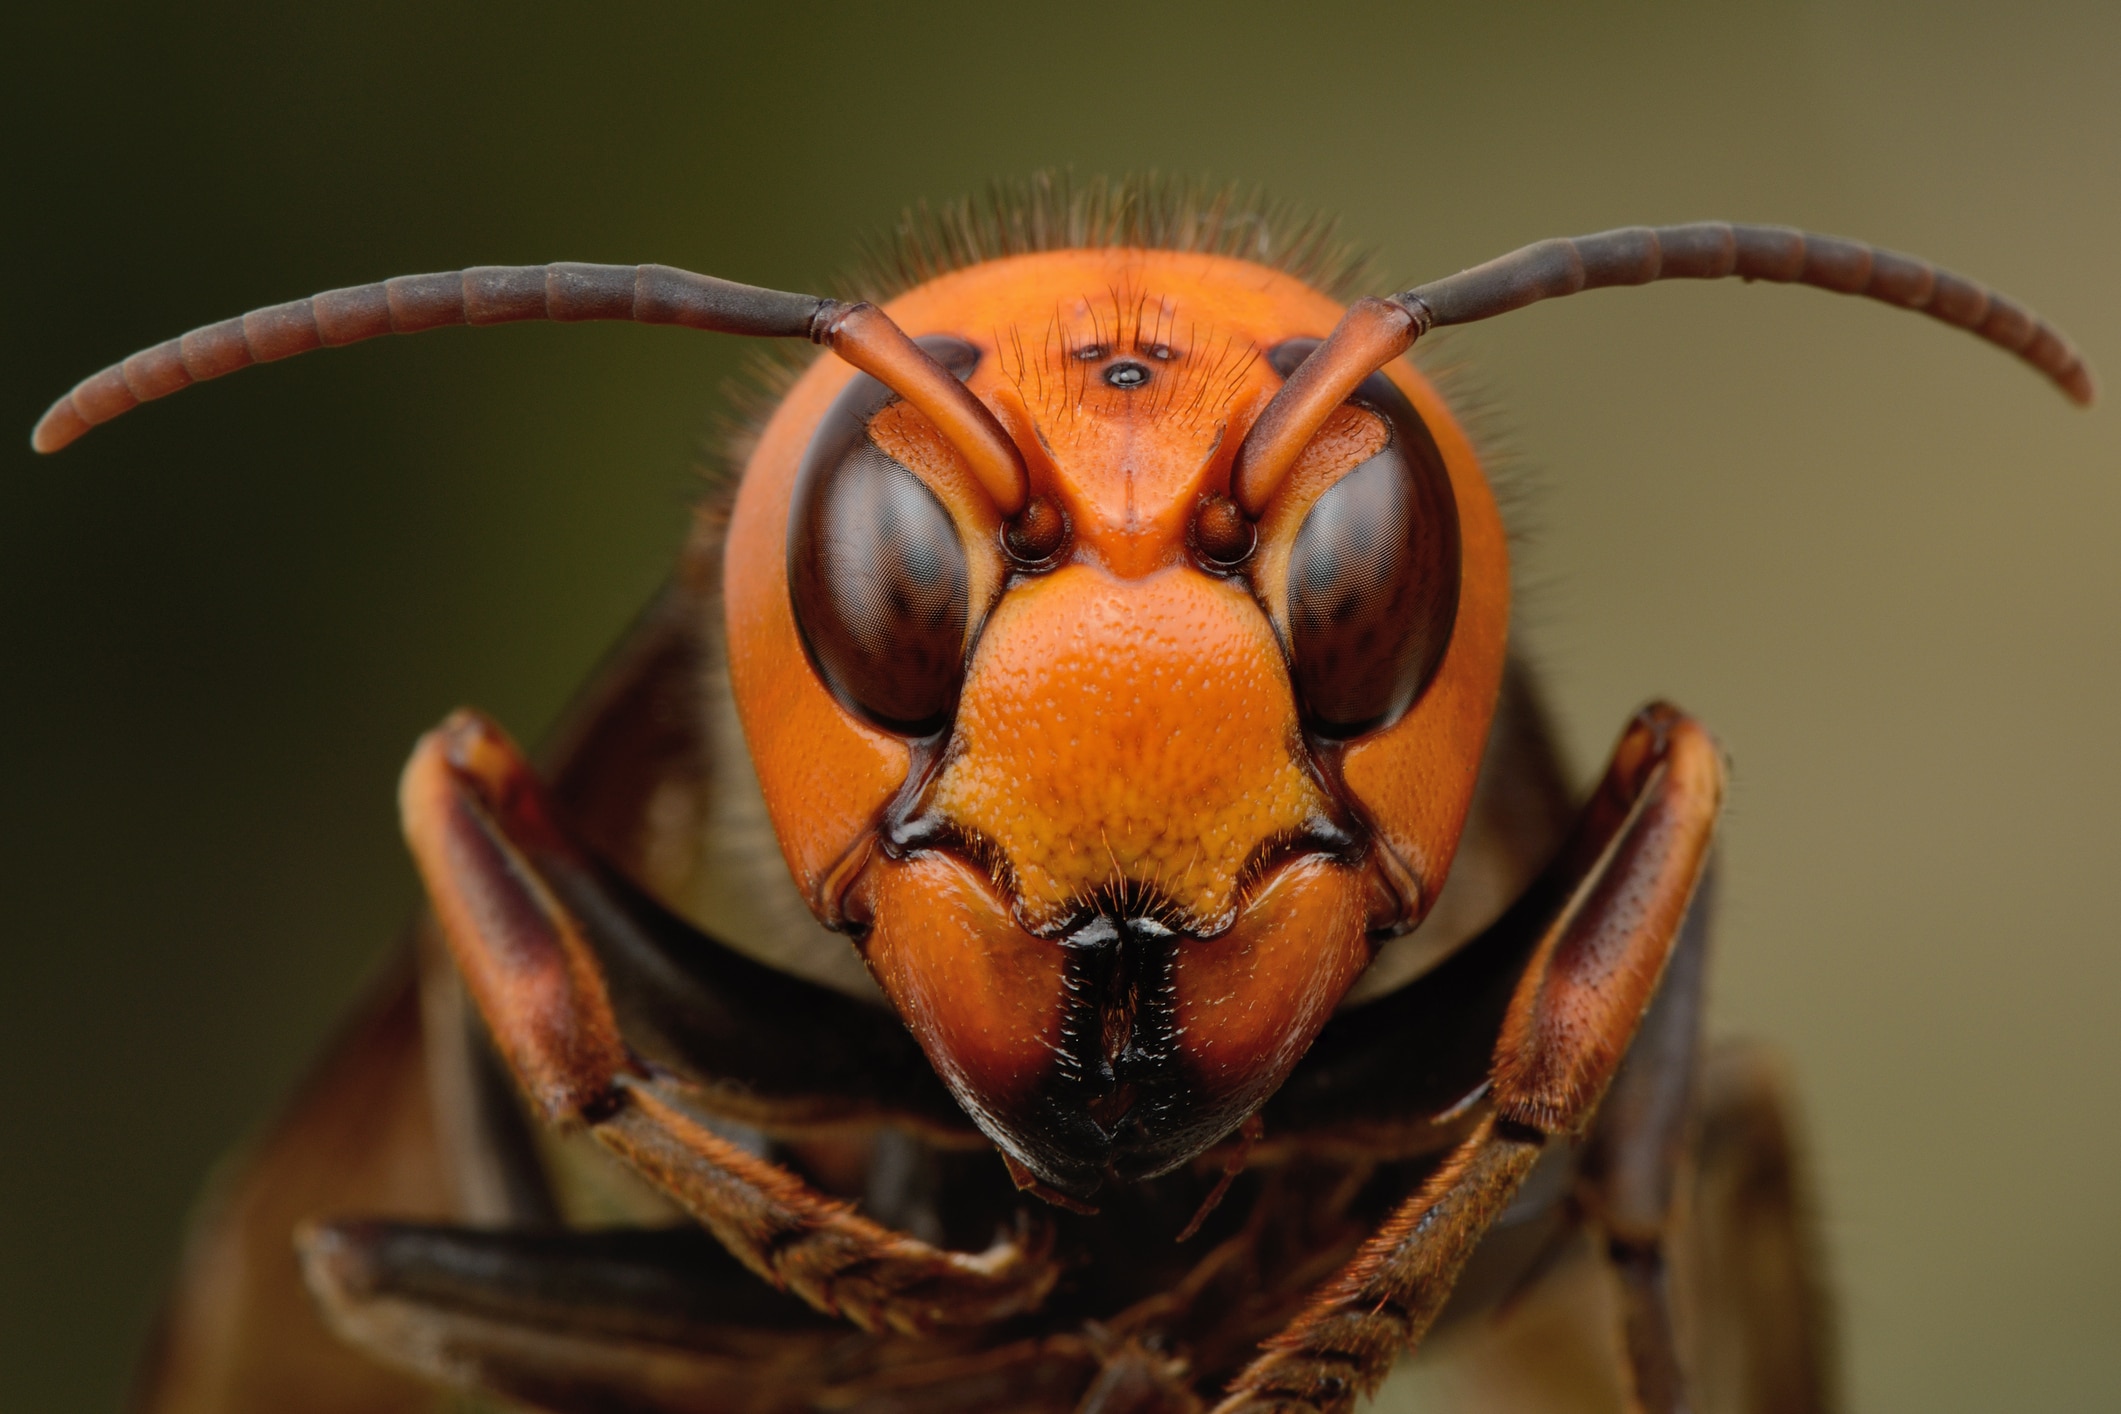 japanese wasp